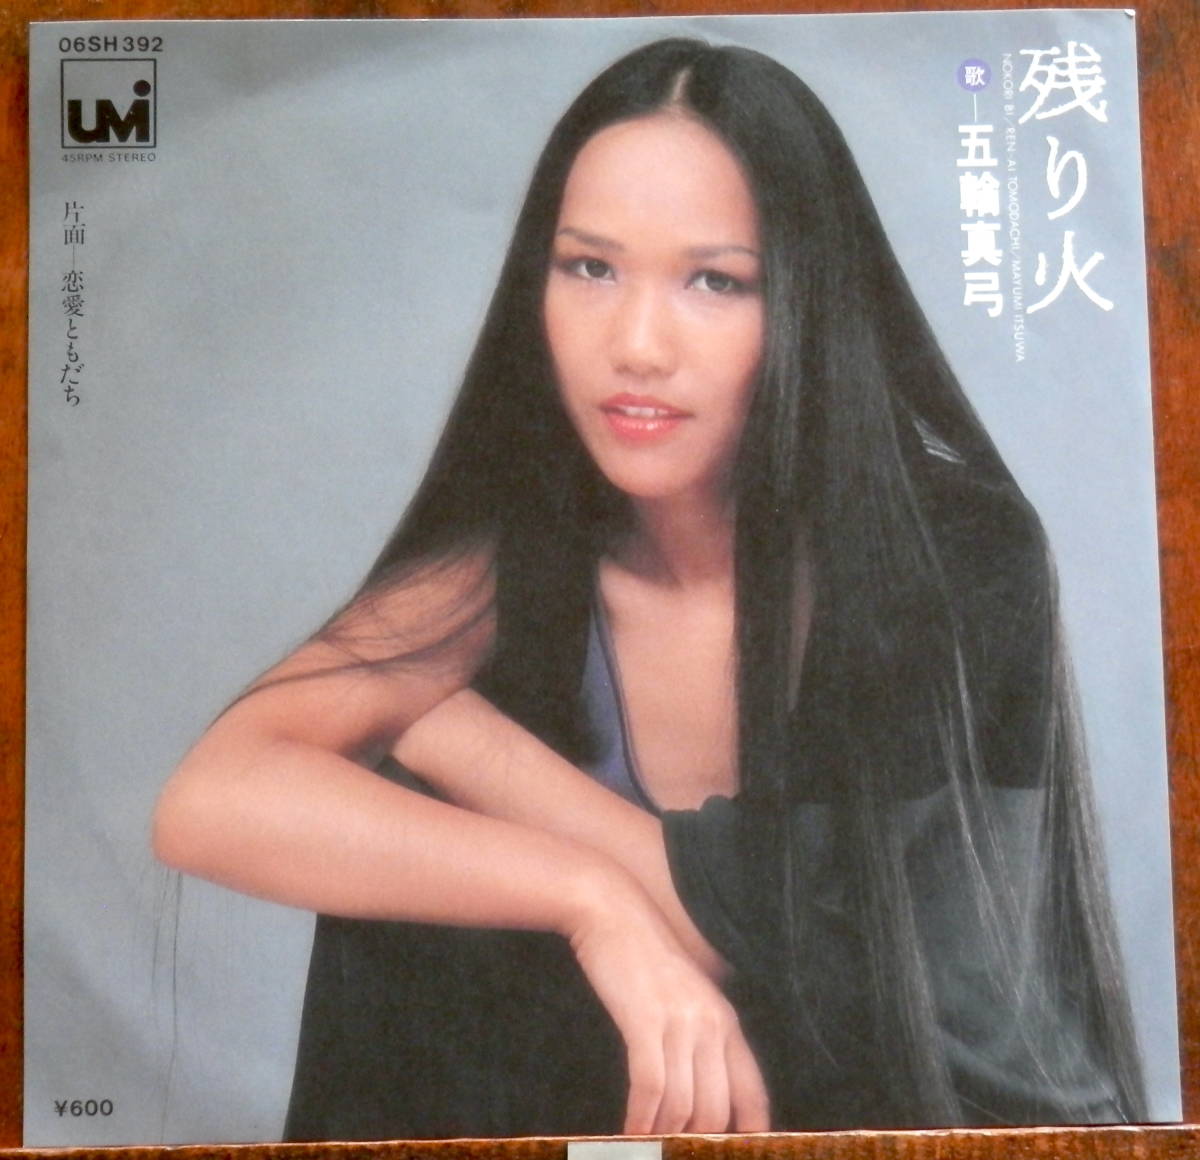 obk[EP] Itsuwa Mayumi - remainder fire *\'77/14th